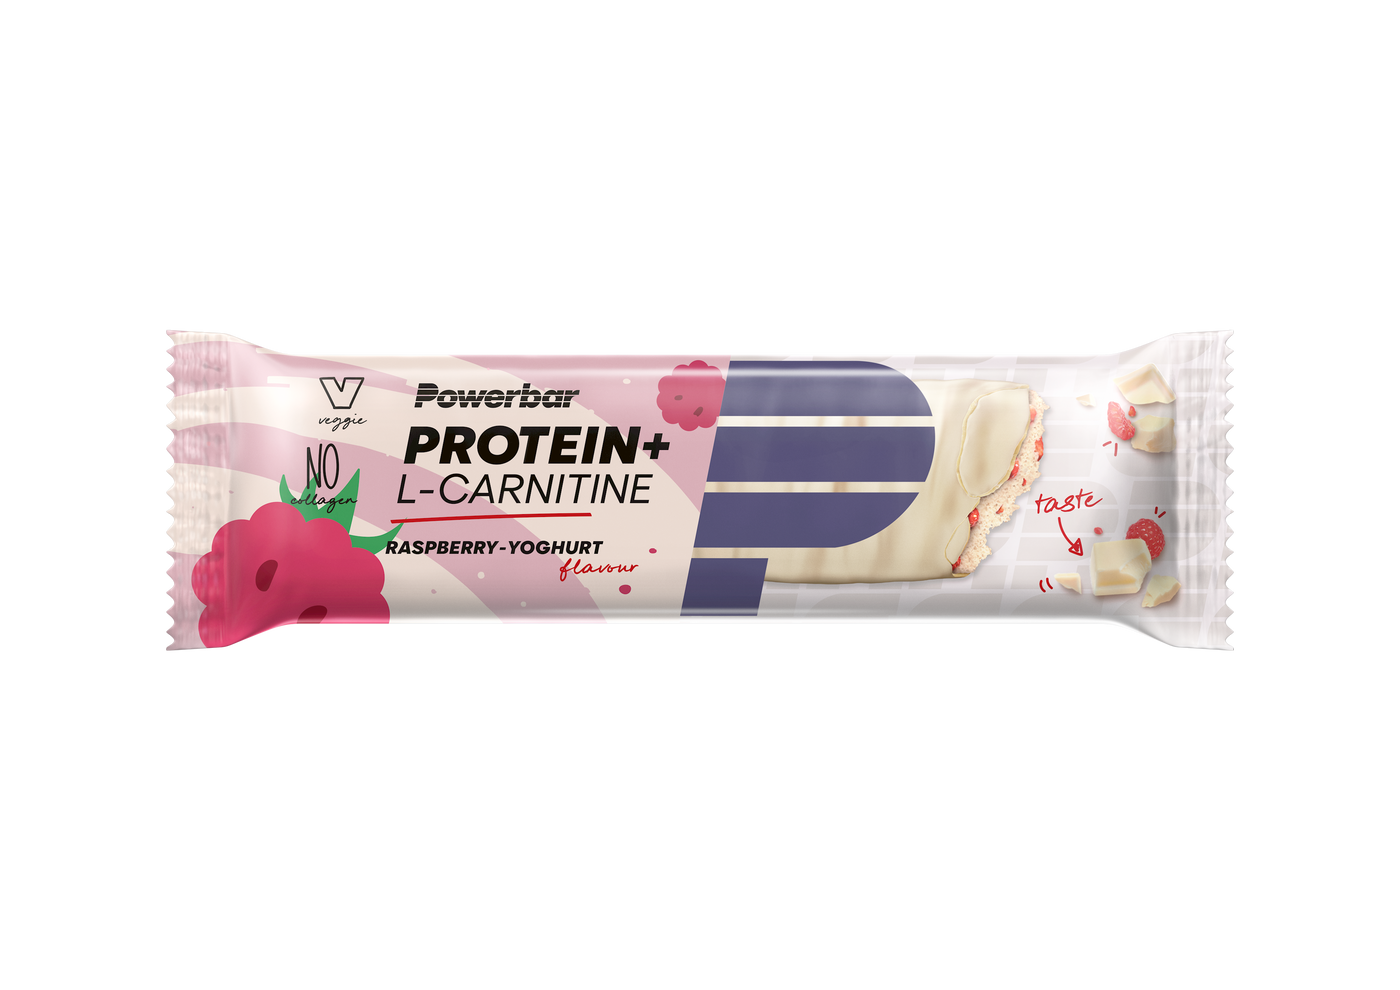 Protein bar, Protein+ L-Carnitine